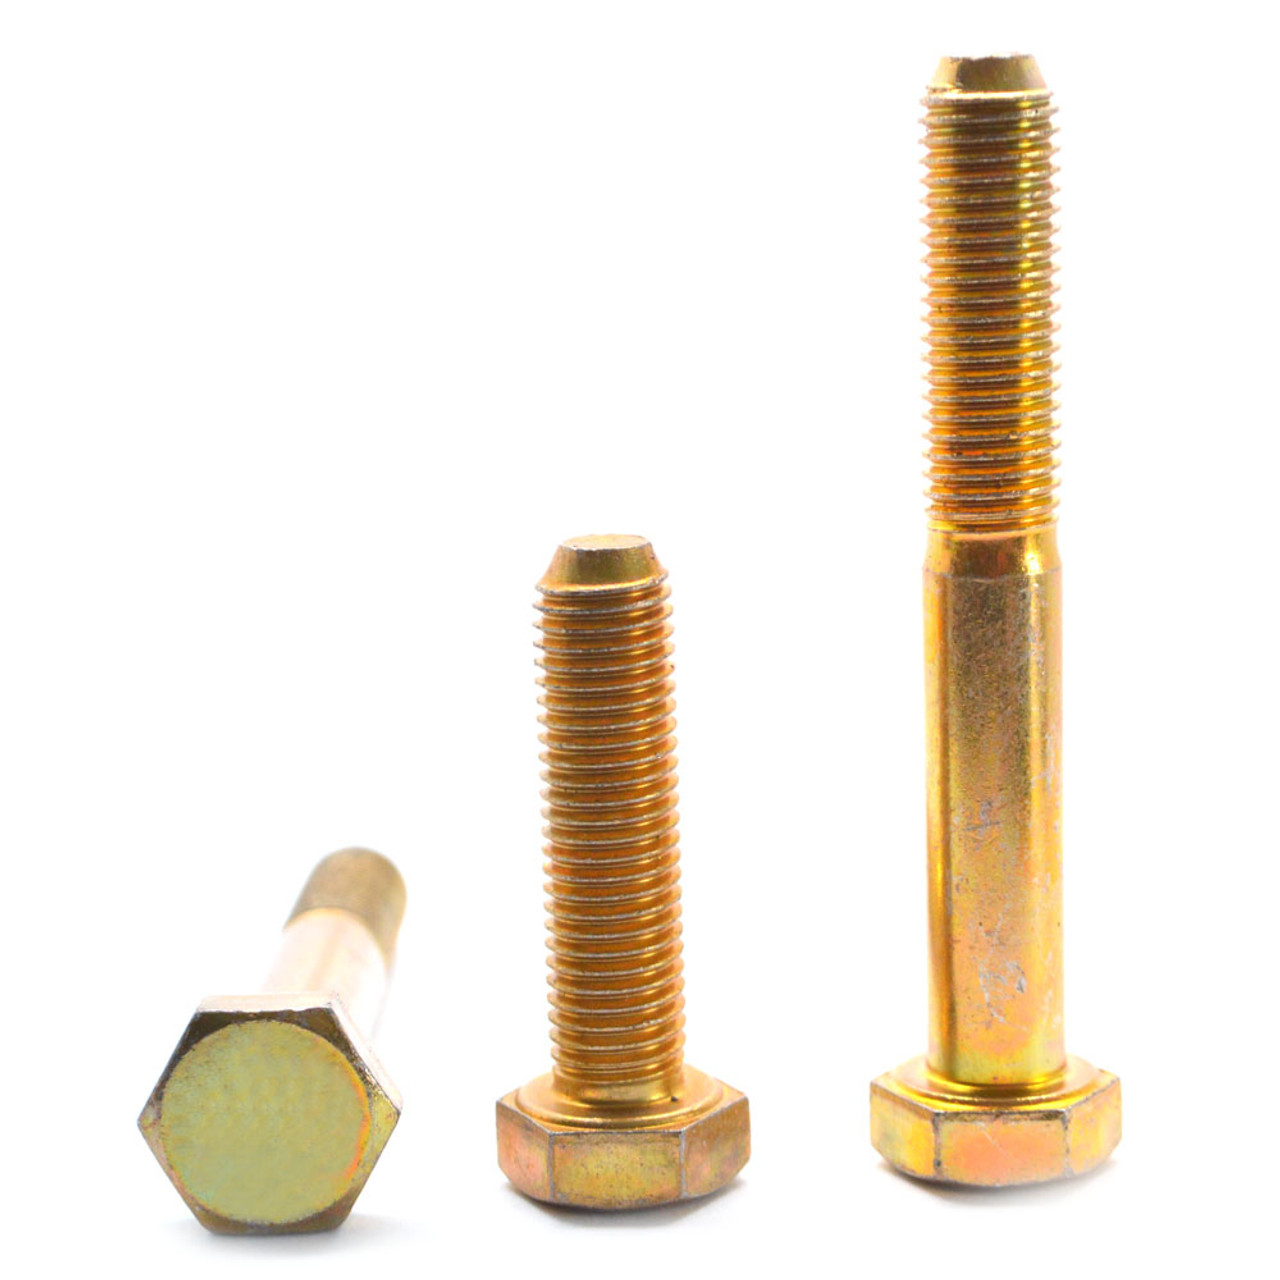 M12 x 1.75 x 100 MM (PT) Coarse Thread DIN 931 Class 10.9 Hex Cap Screw (Bolt) Alloy Steel Yellow Zinc Plated